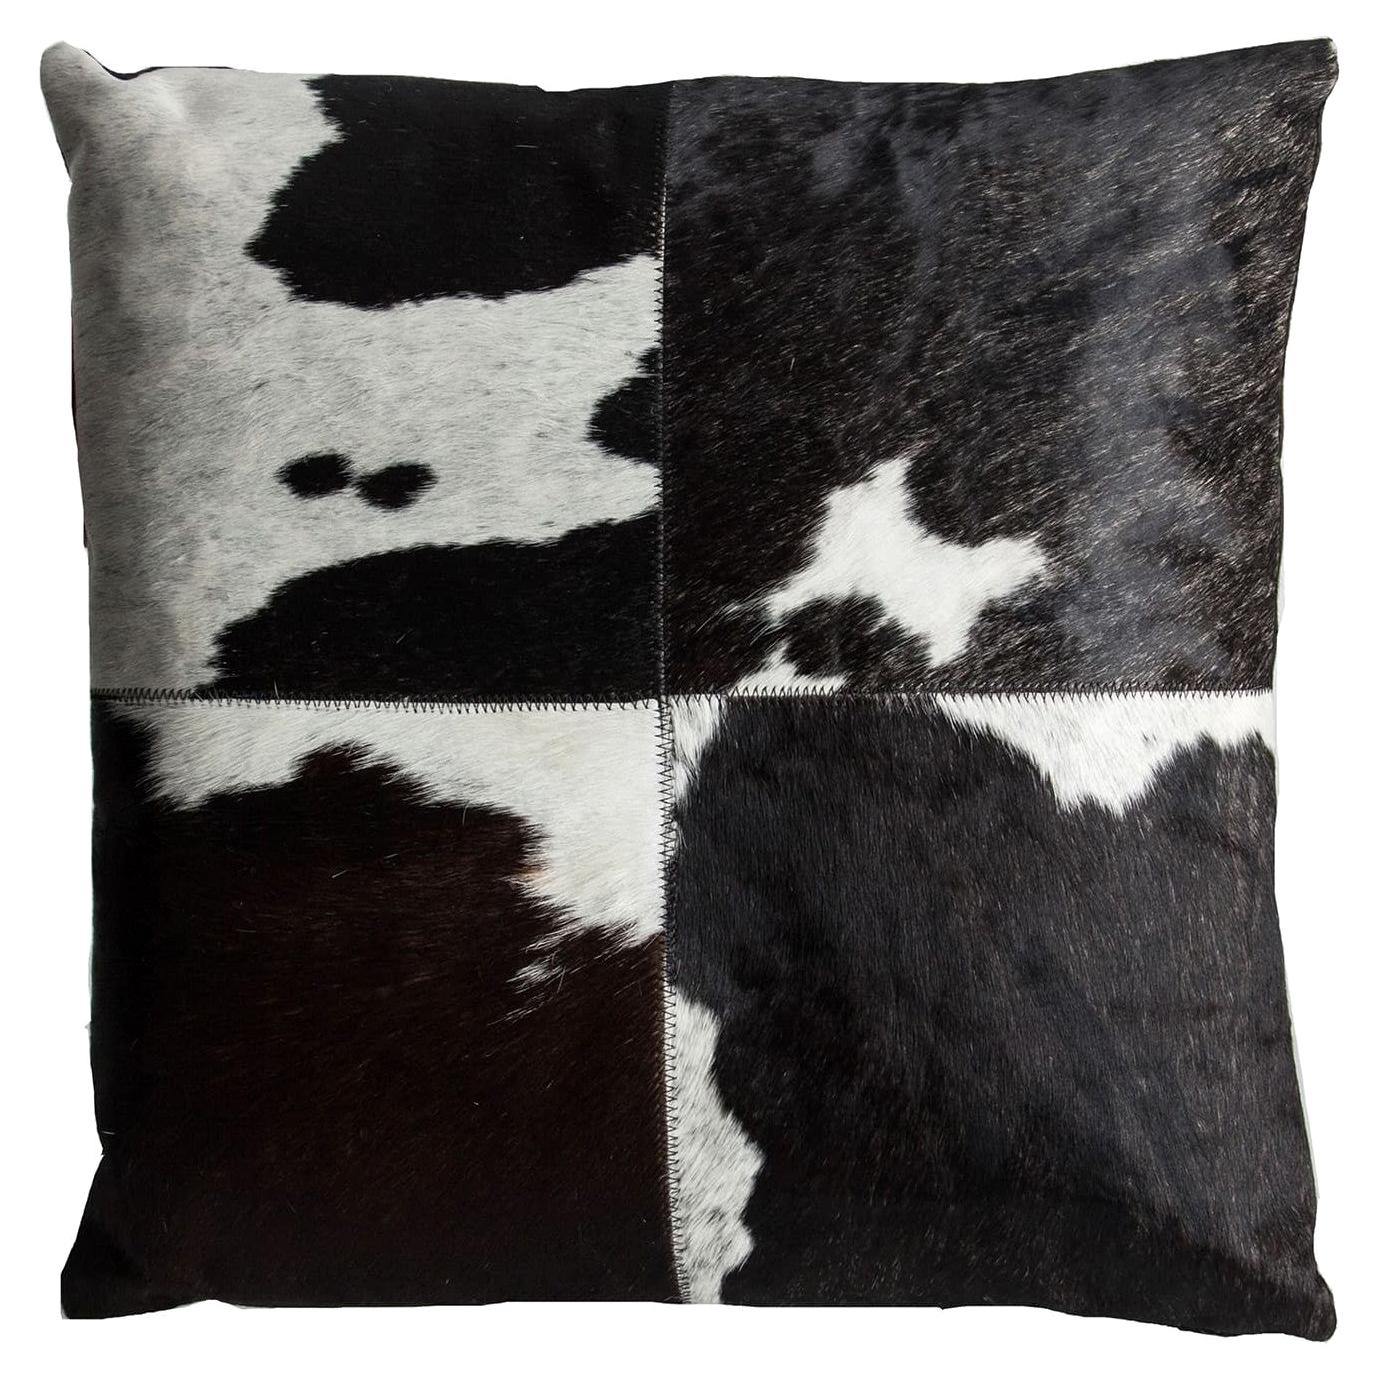 Black and White Cowhide Cushion